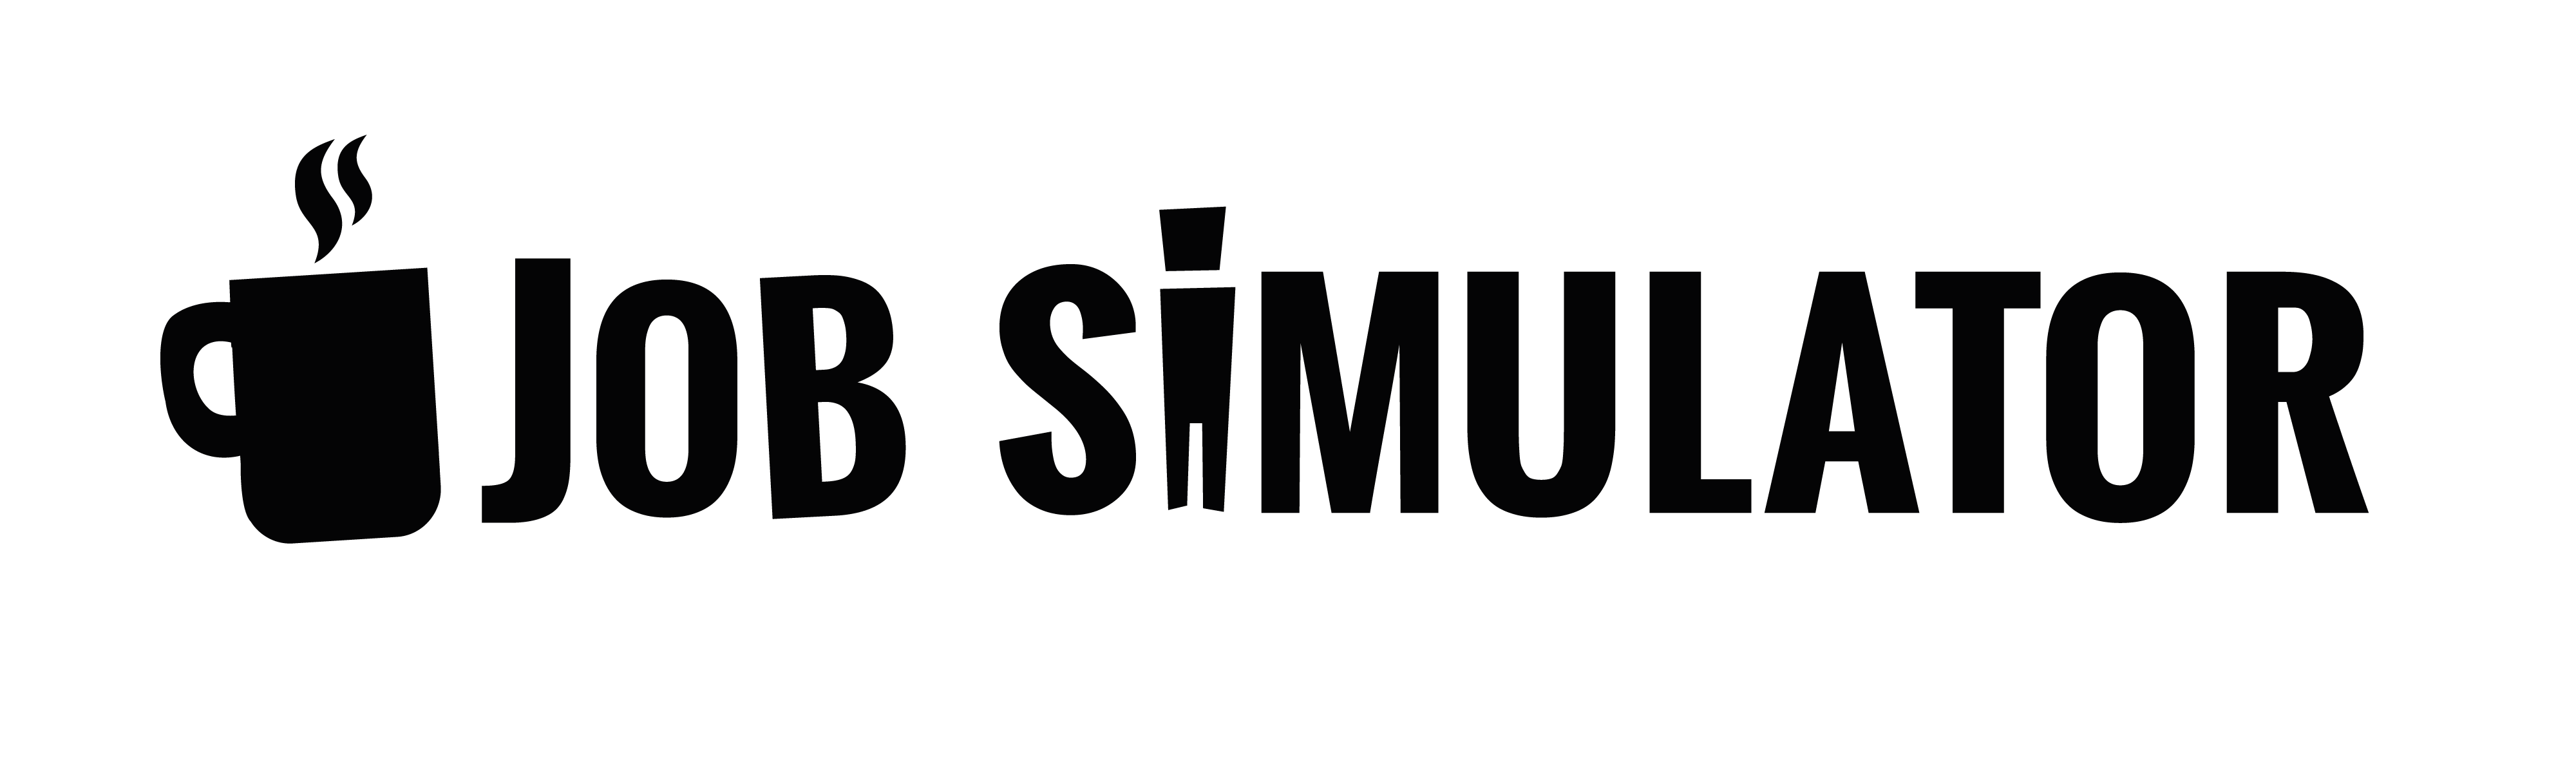 Simulator Logo - Owlchemy Labs Brand & Logo Usage Guidelines